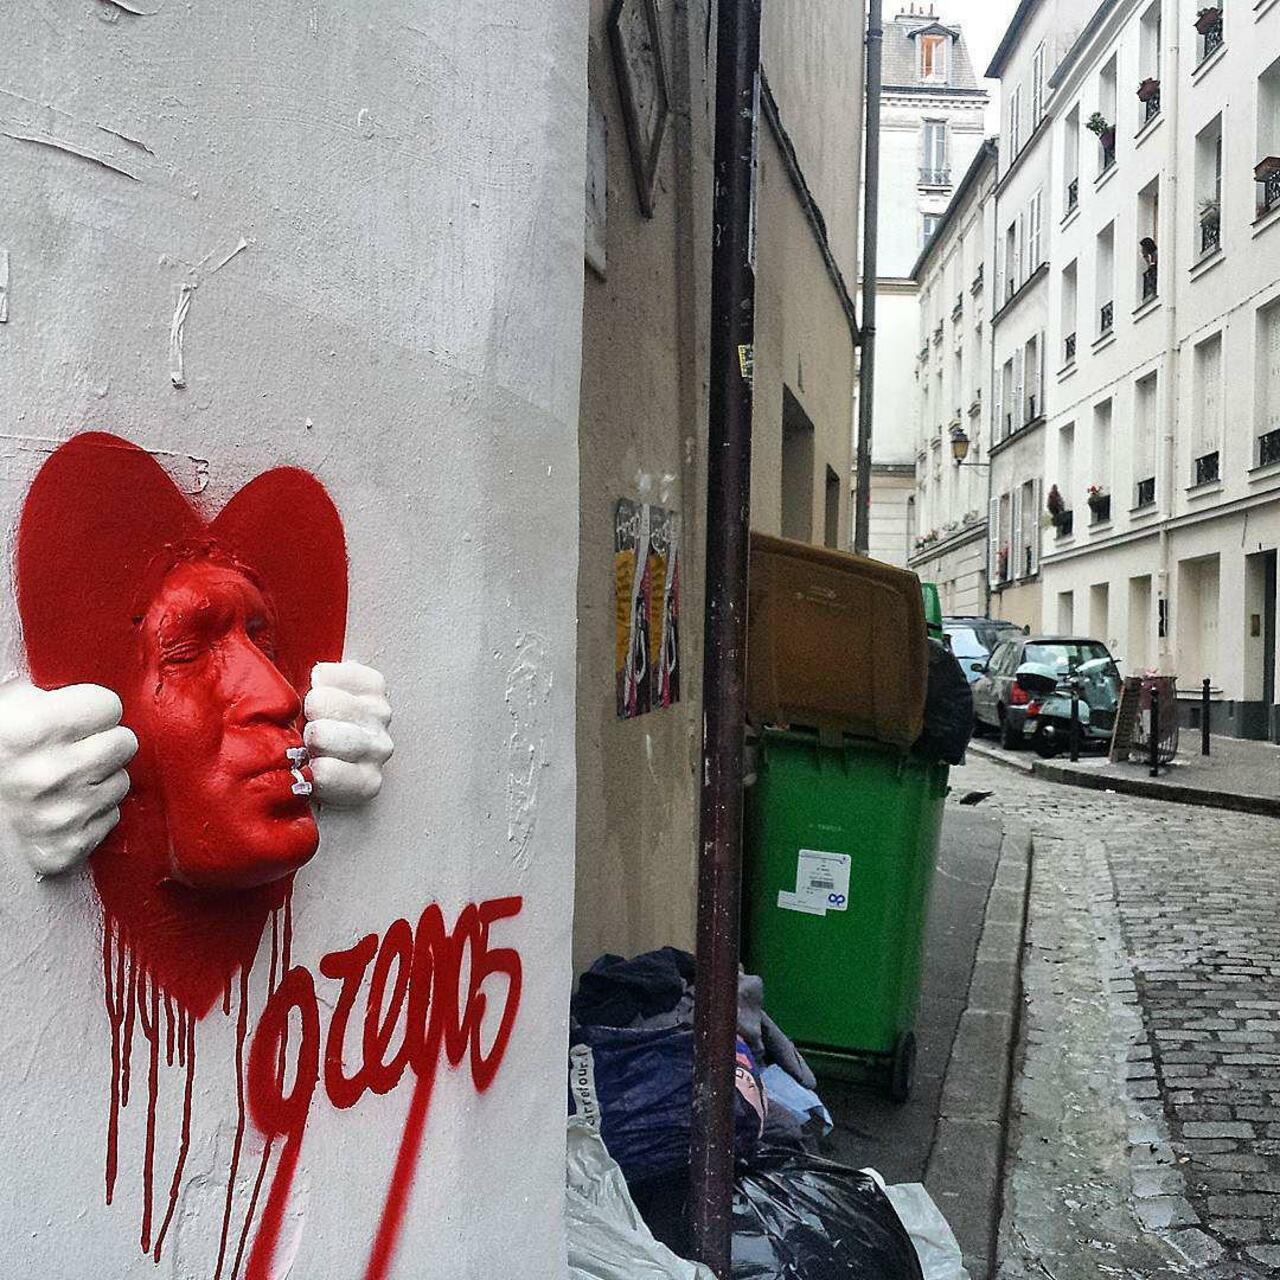 #Paris #graffiti photo by @streetartparischris http://ift.tt/1MhOAg3 #StreetArt http://t.co/PS1IziFFBa